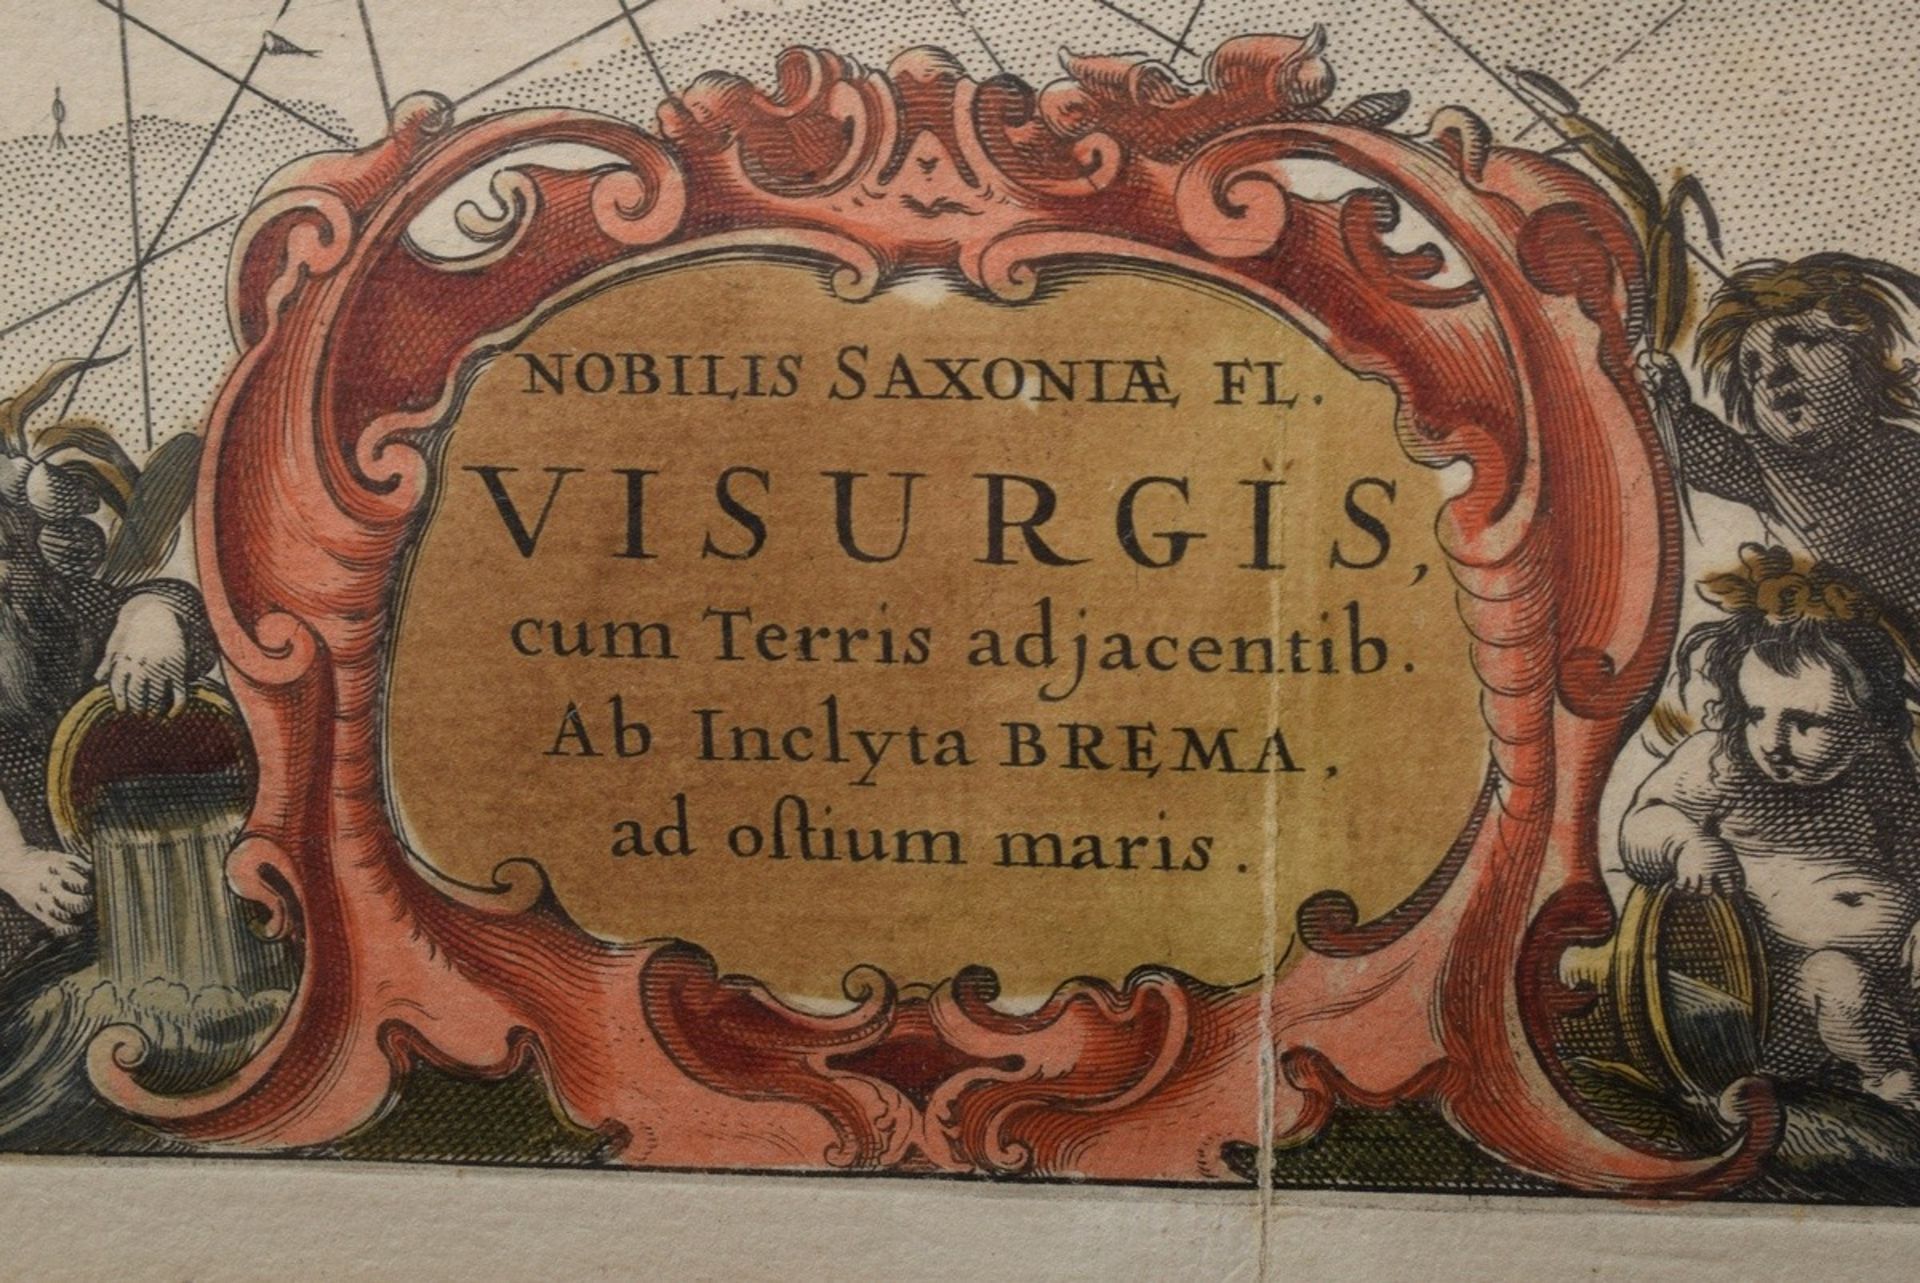 Loon, Johannes van (c.1611-1686) "Nobilis Saxoniae Fl. Visurgis..." (Wesermündung), ungenordete See - Bild 3 aus 4